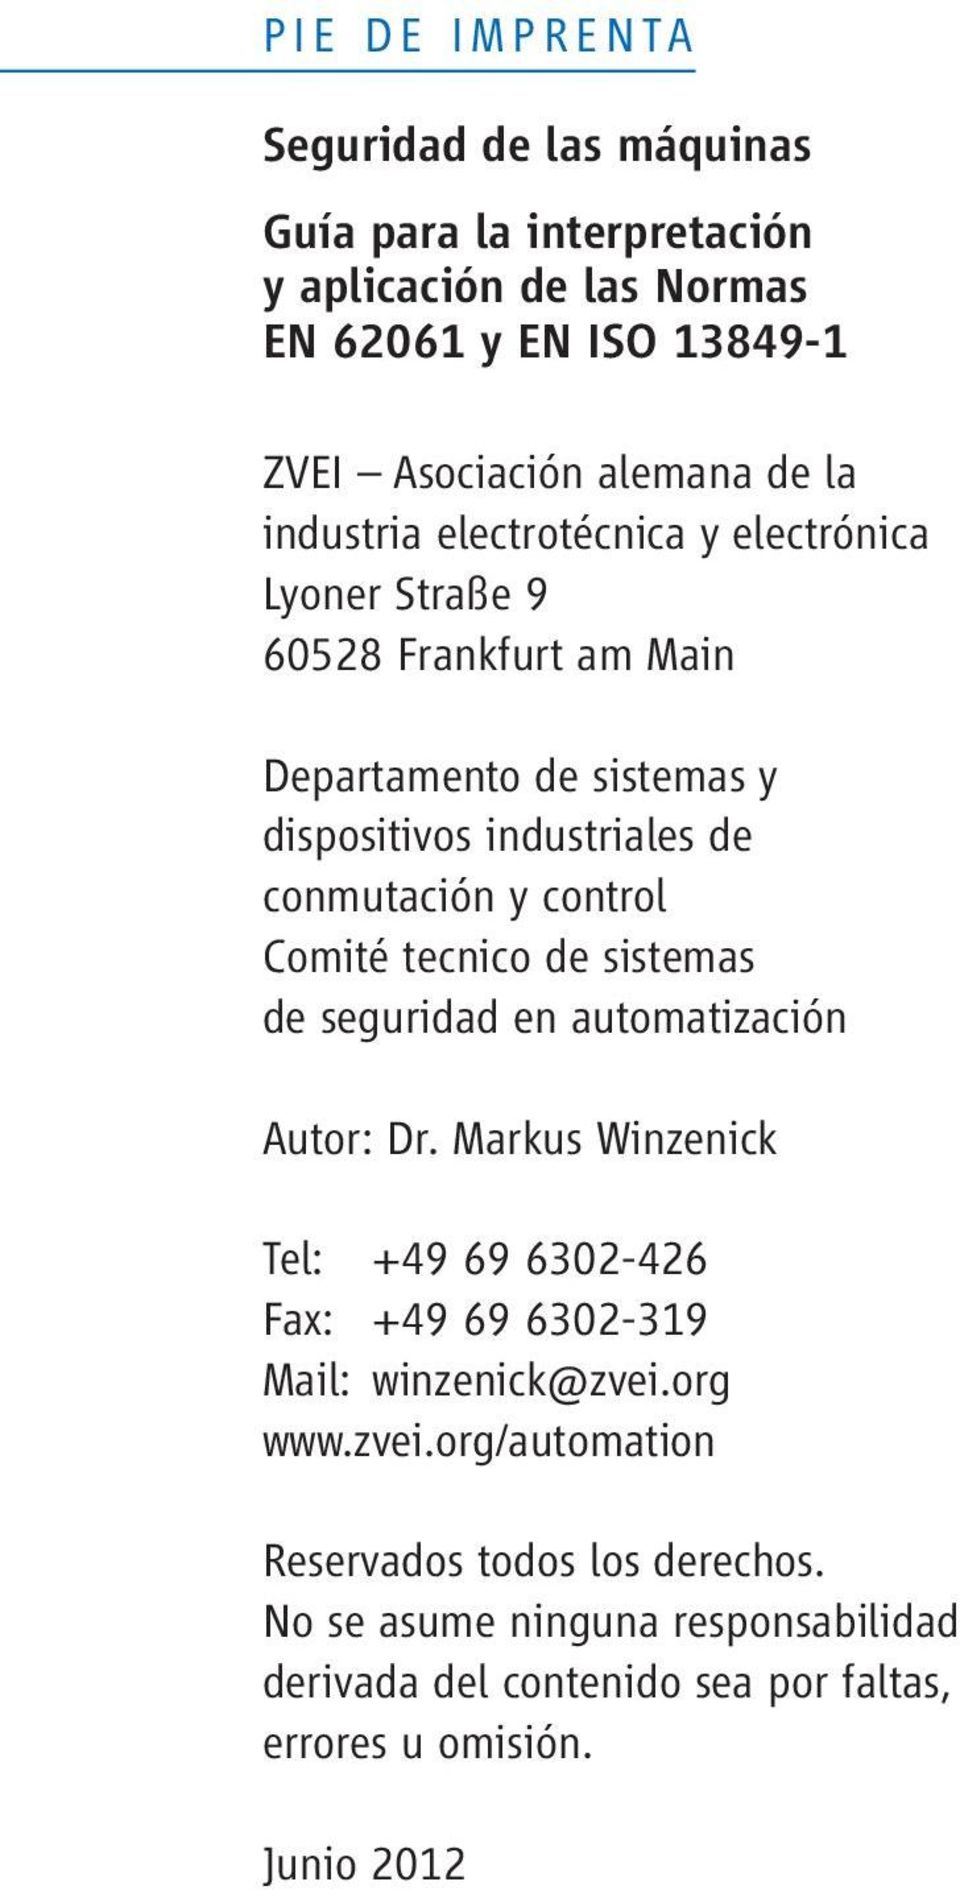 control Comité tecnico de sistemas de seguridad en automatización Autor: Dr. Markus Winzenick Tel: +49 69 6302-426 Fax: +49 69 6302-319 Mail: winzenick@zvei.